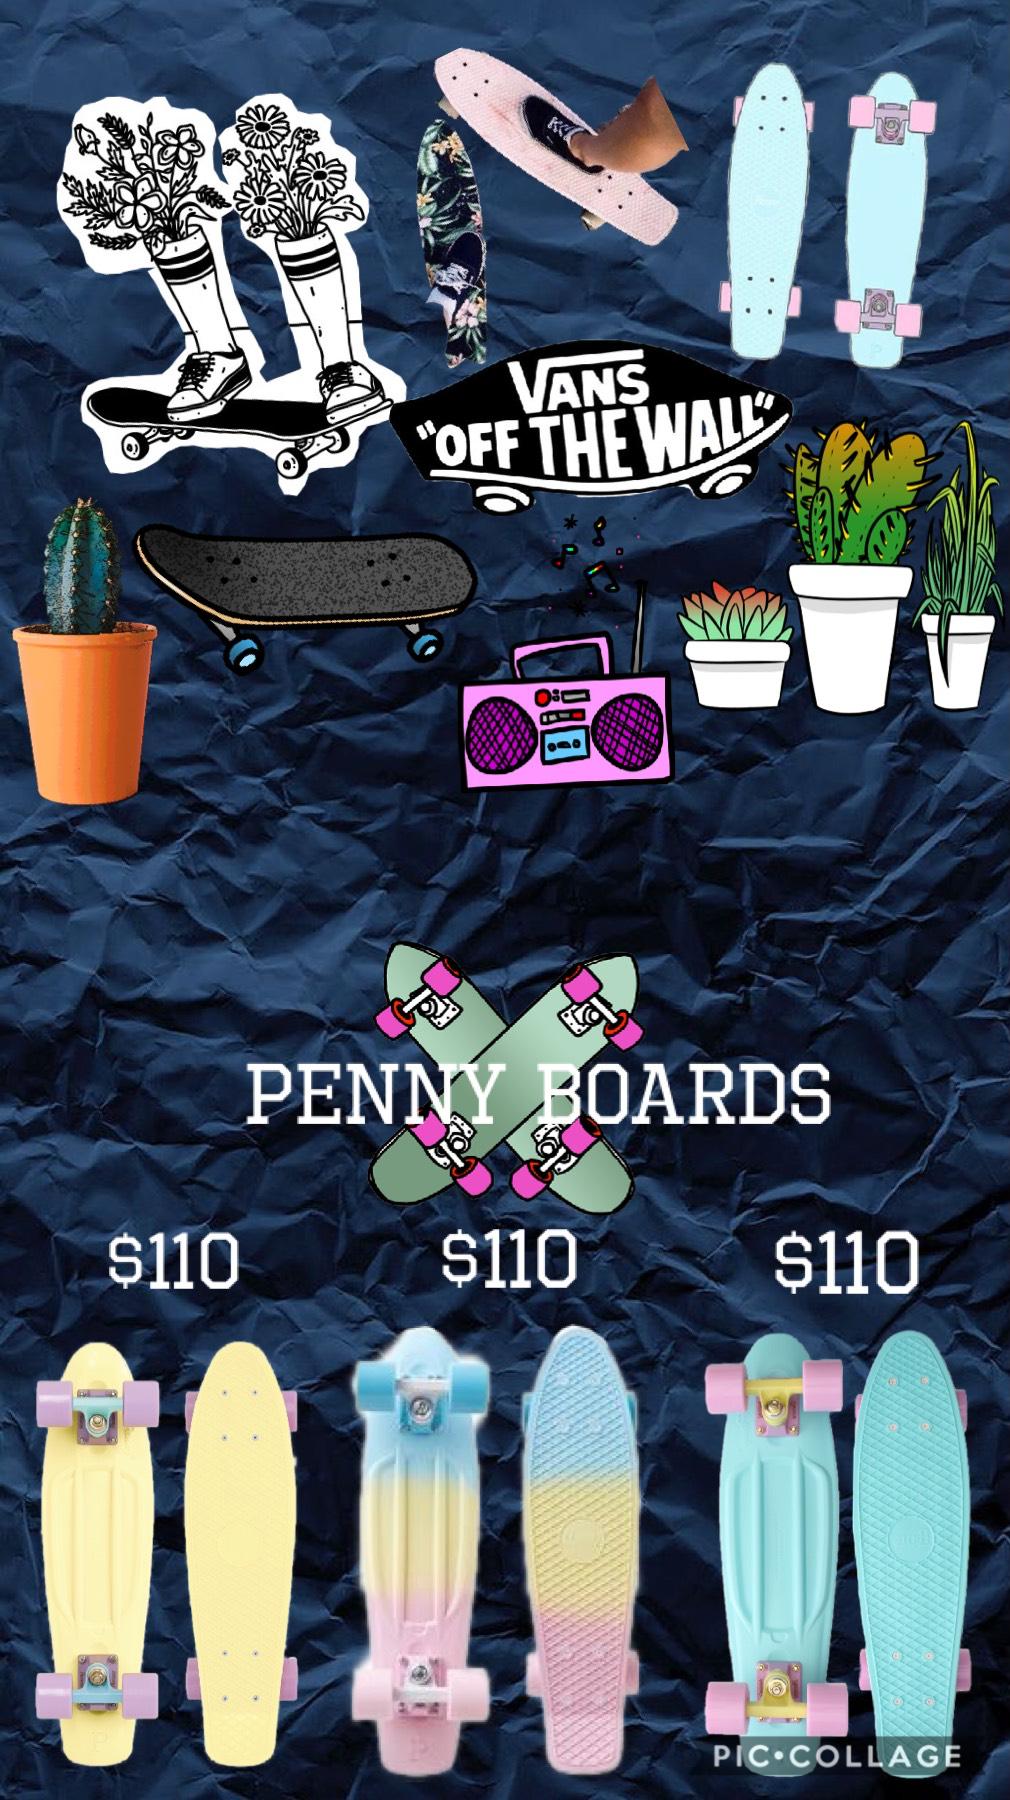 Really Wantin a penny board rn 